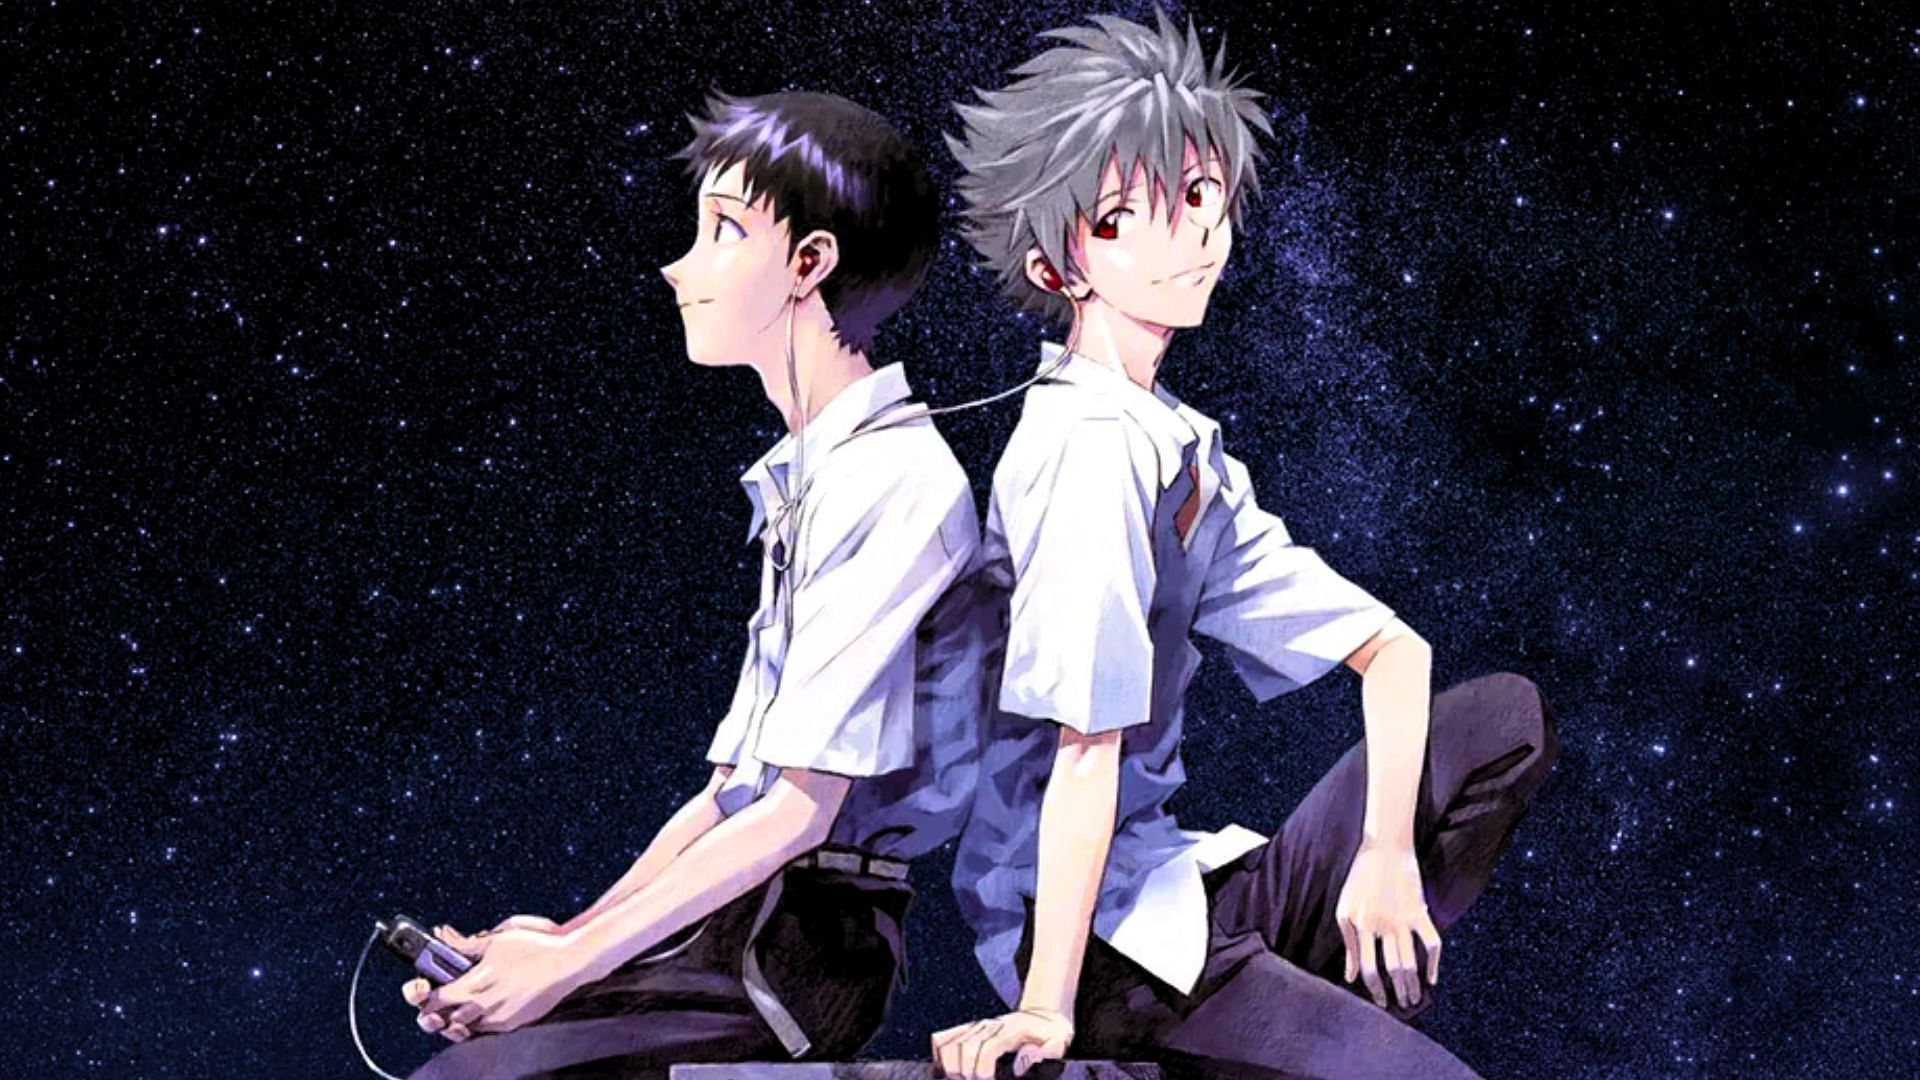 Shinji and Kaworu from Neon Genesis Evangelion (Image via Gainax)